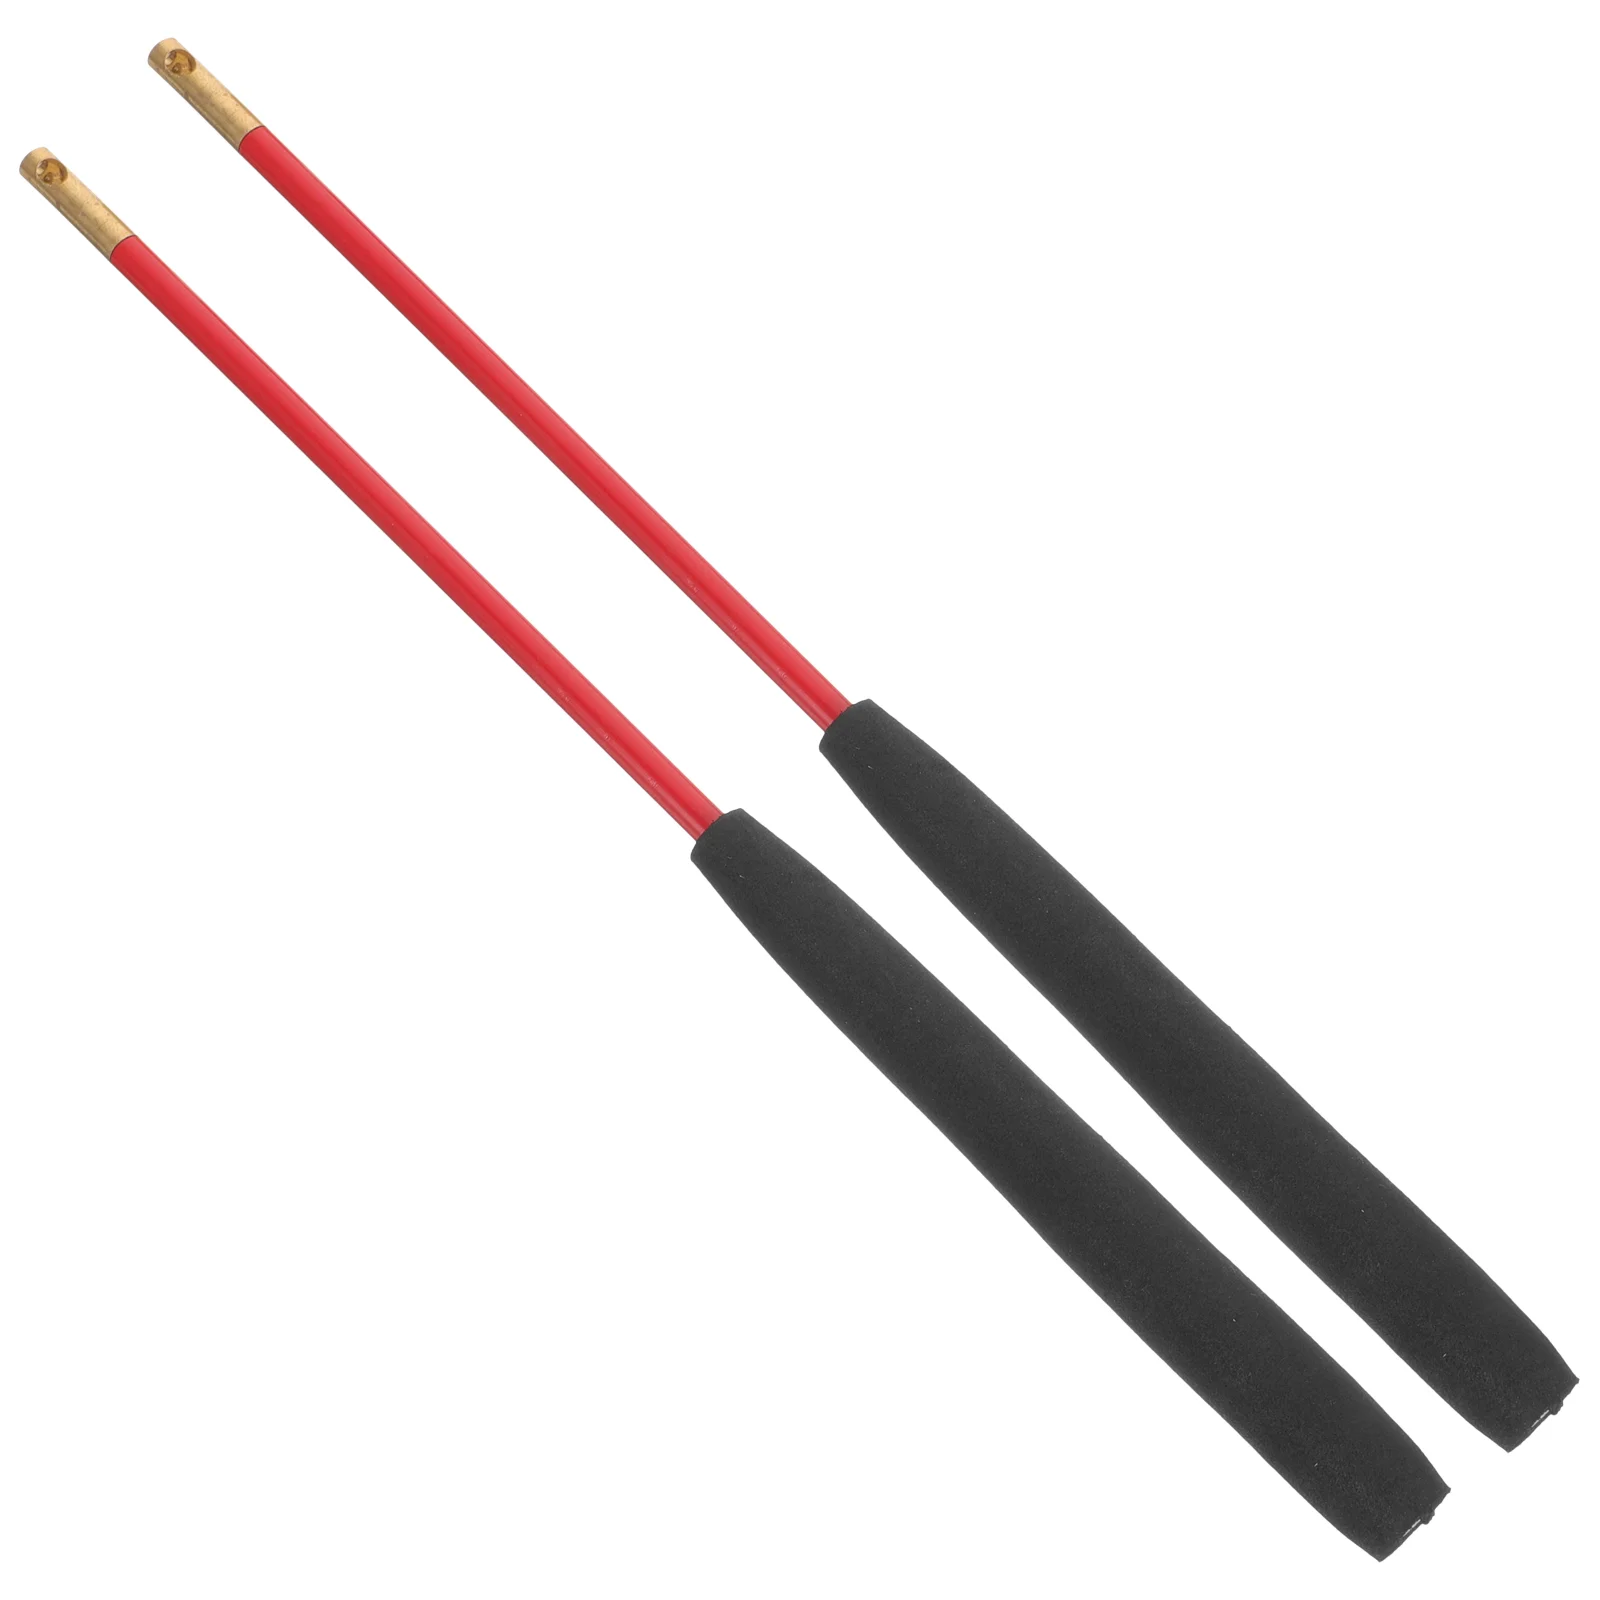 

1 Pair Diabolo Sticks Diabolo Handsticks Chinese Diabolo Sticks Juggling Diabolo Stick